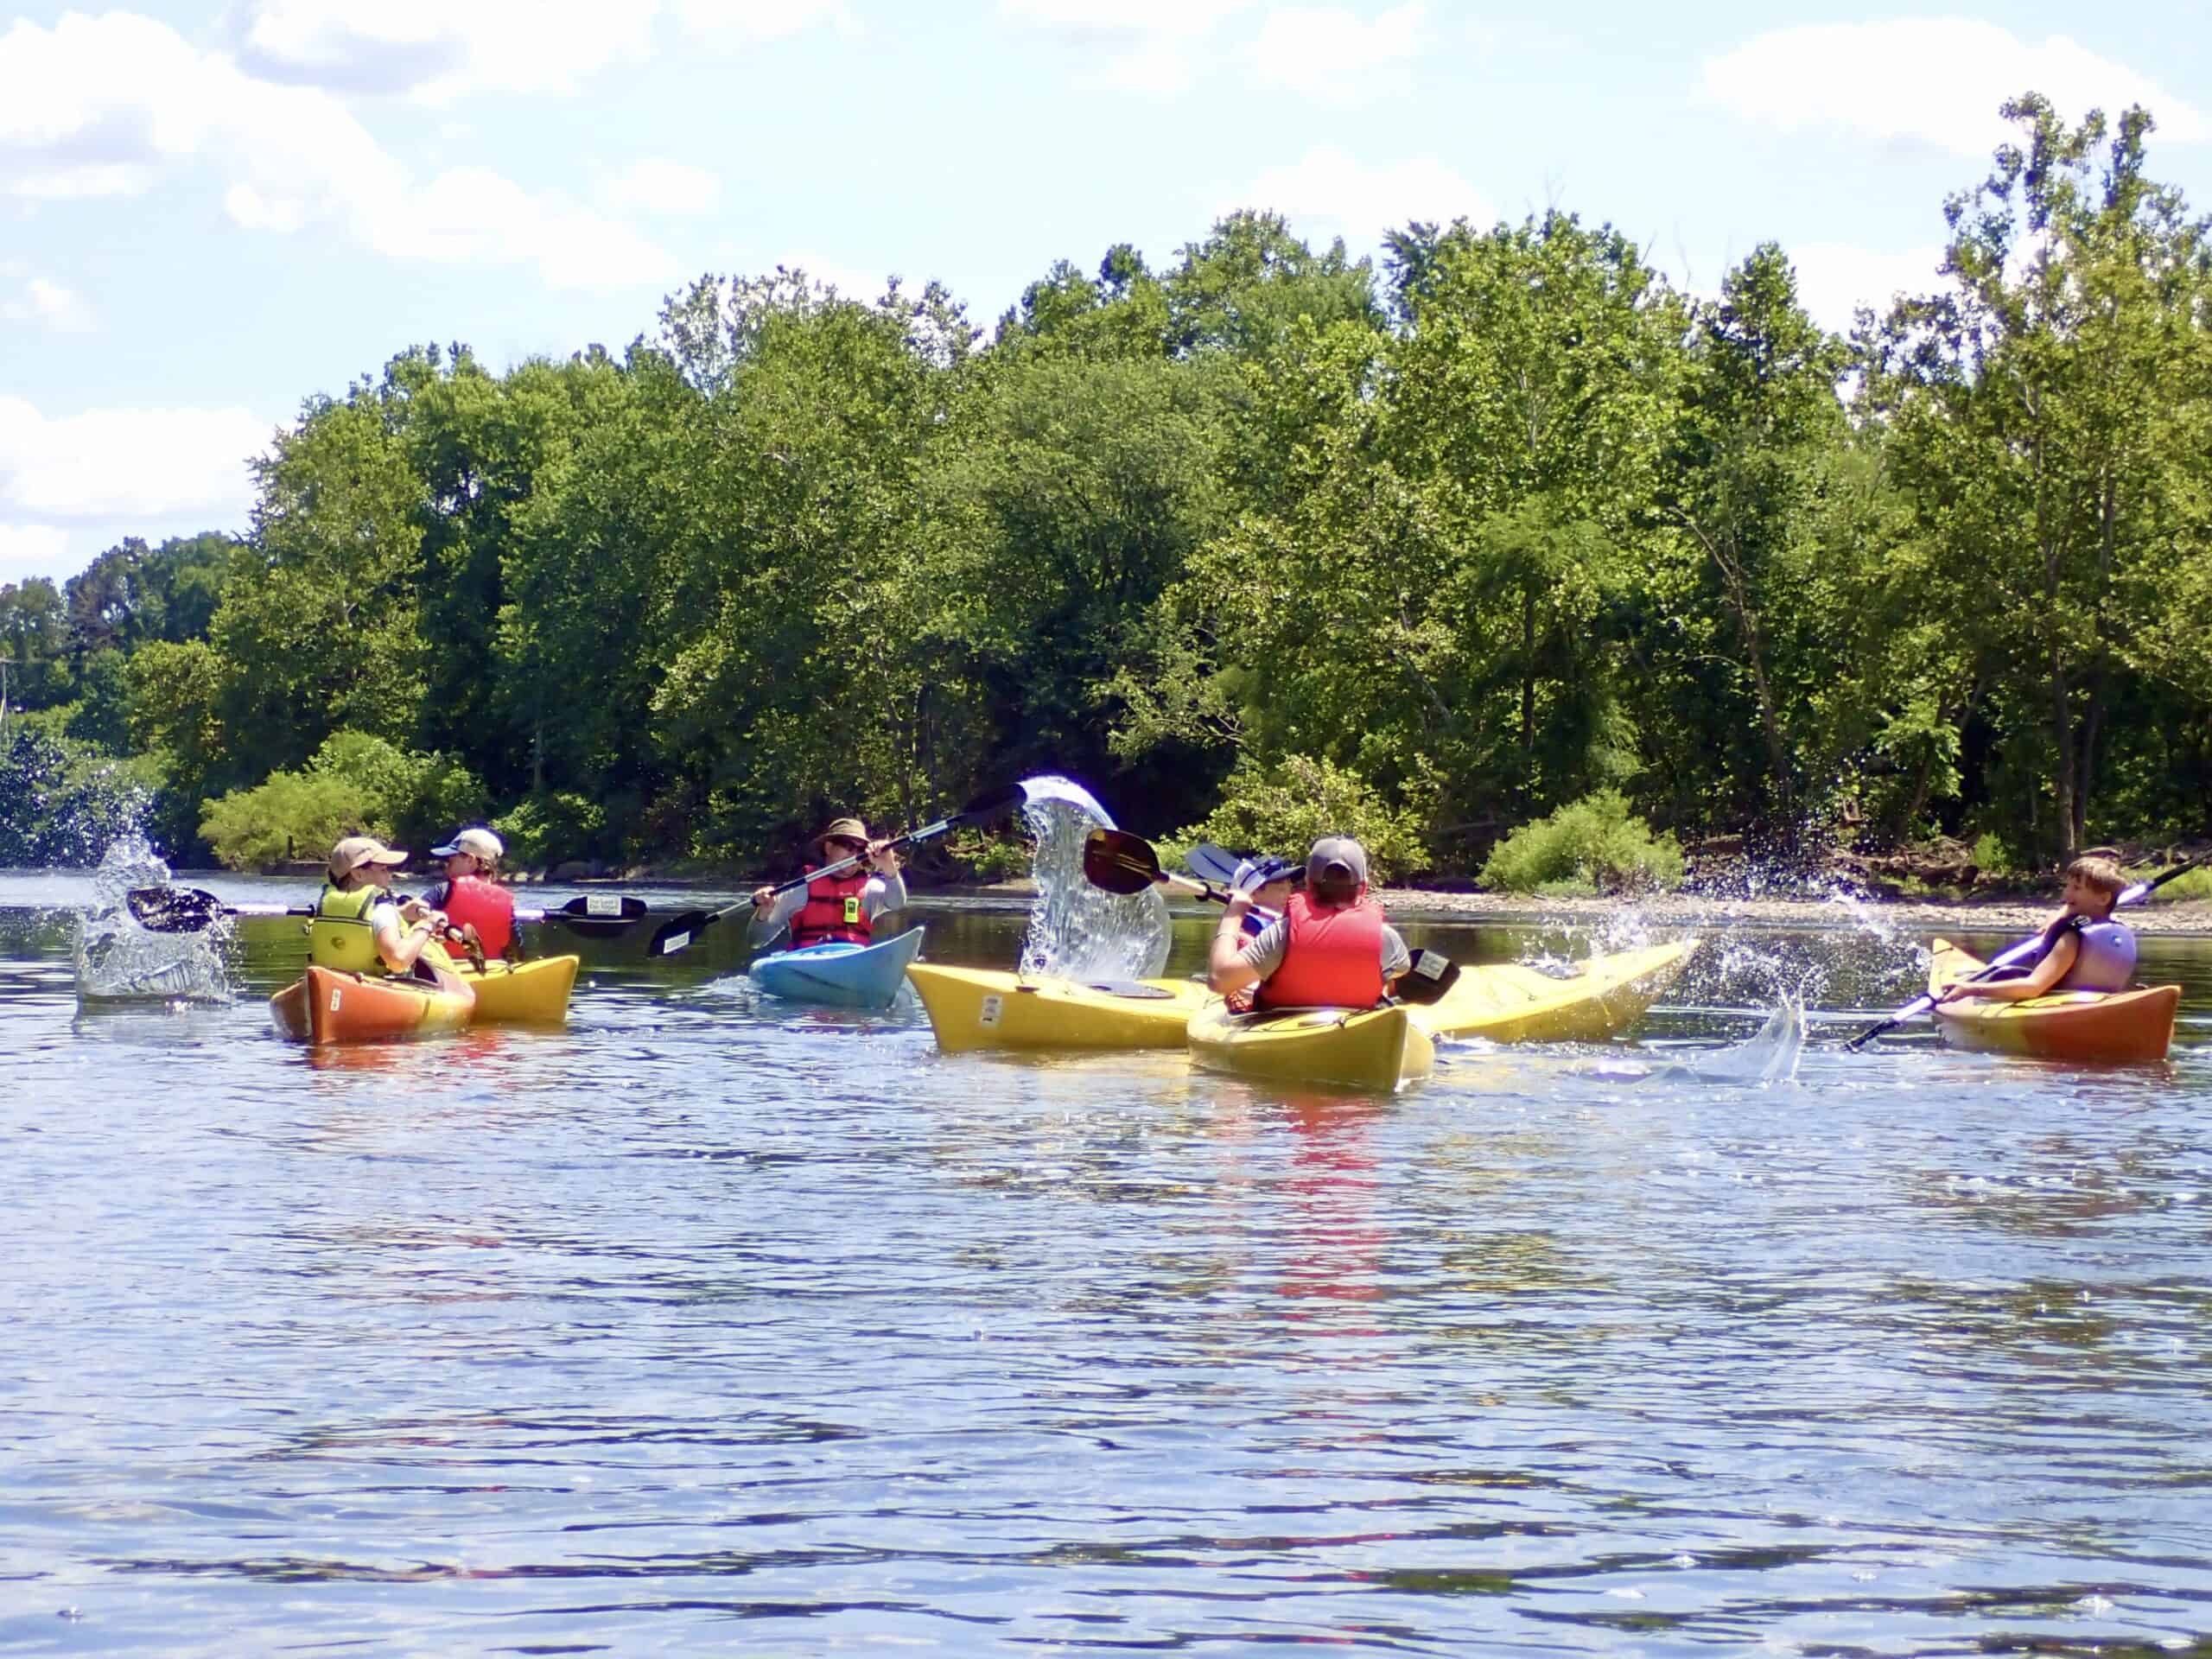 Kids in kayaks on Schuylkill River